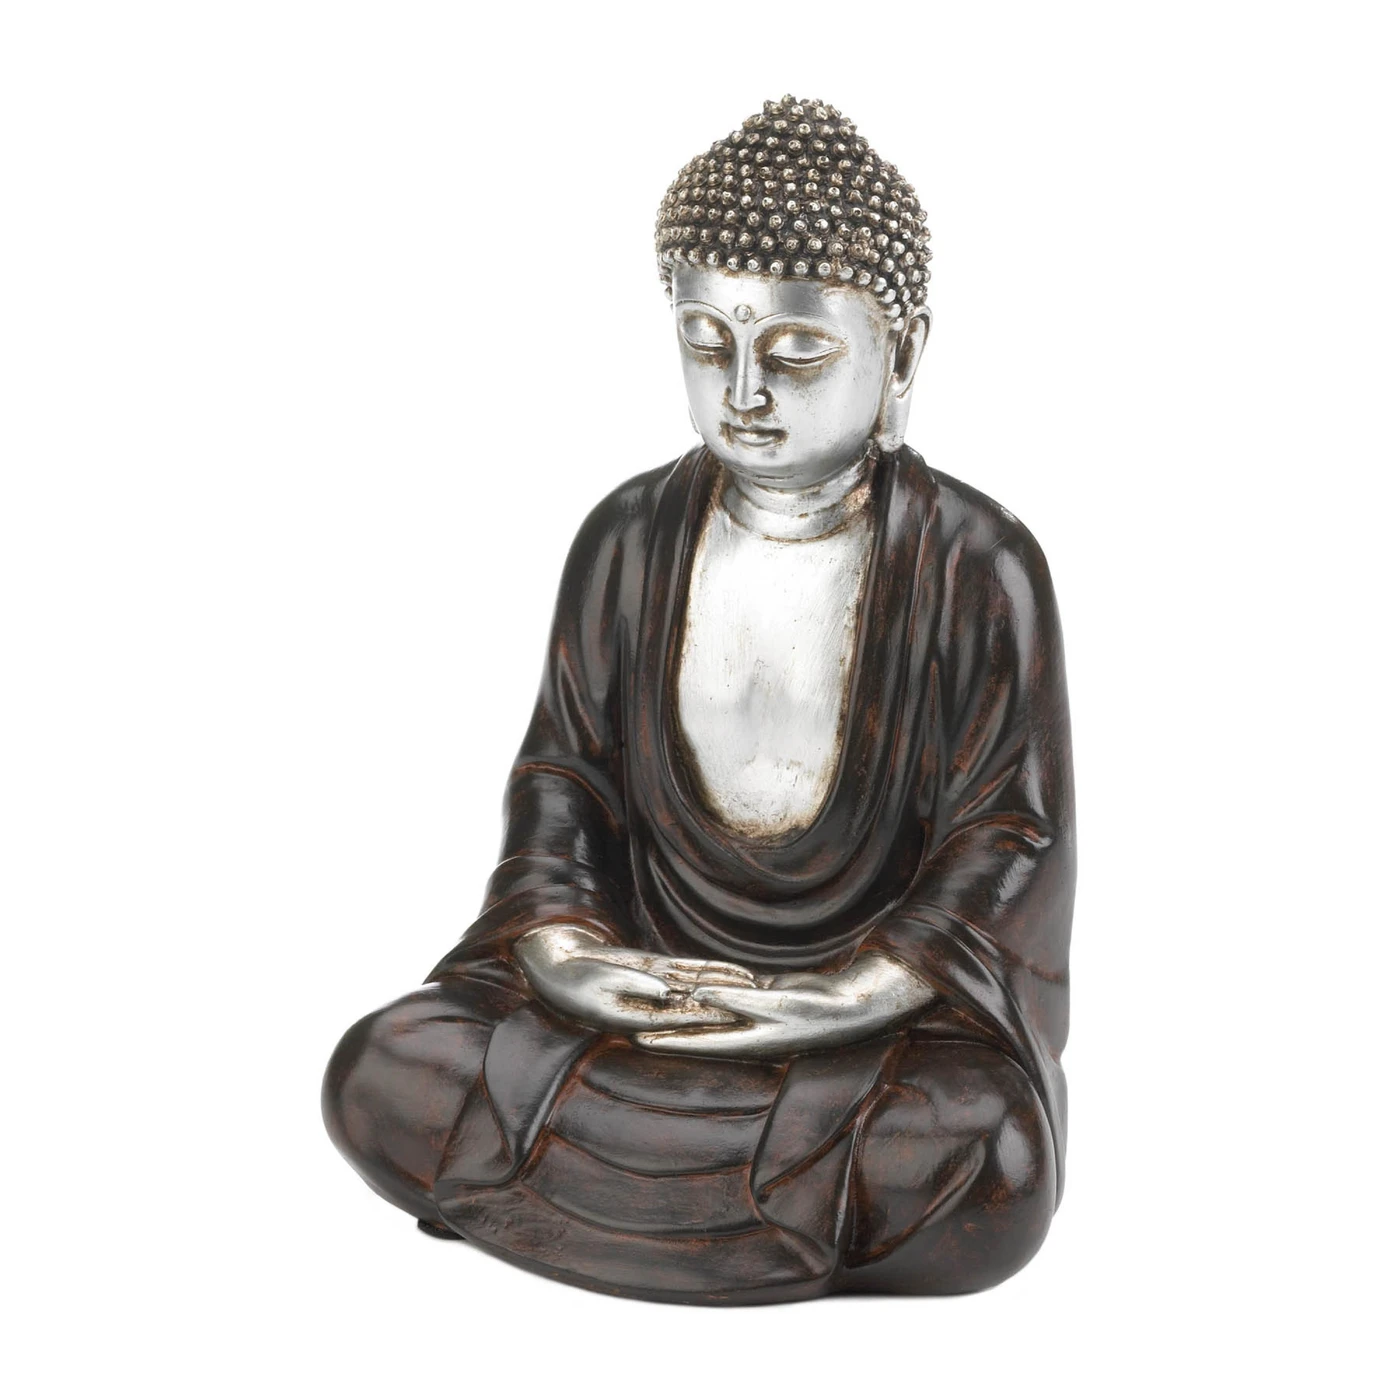 Peaceful Sitting Buddha - $31.11